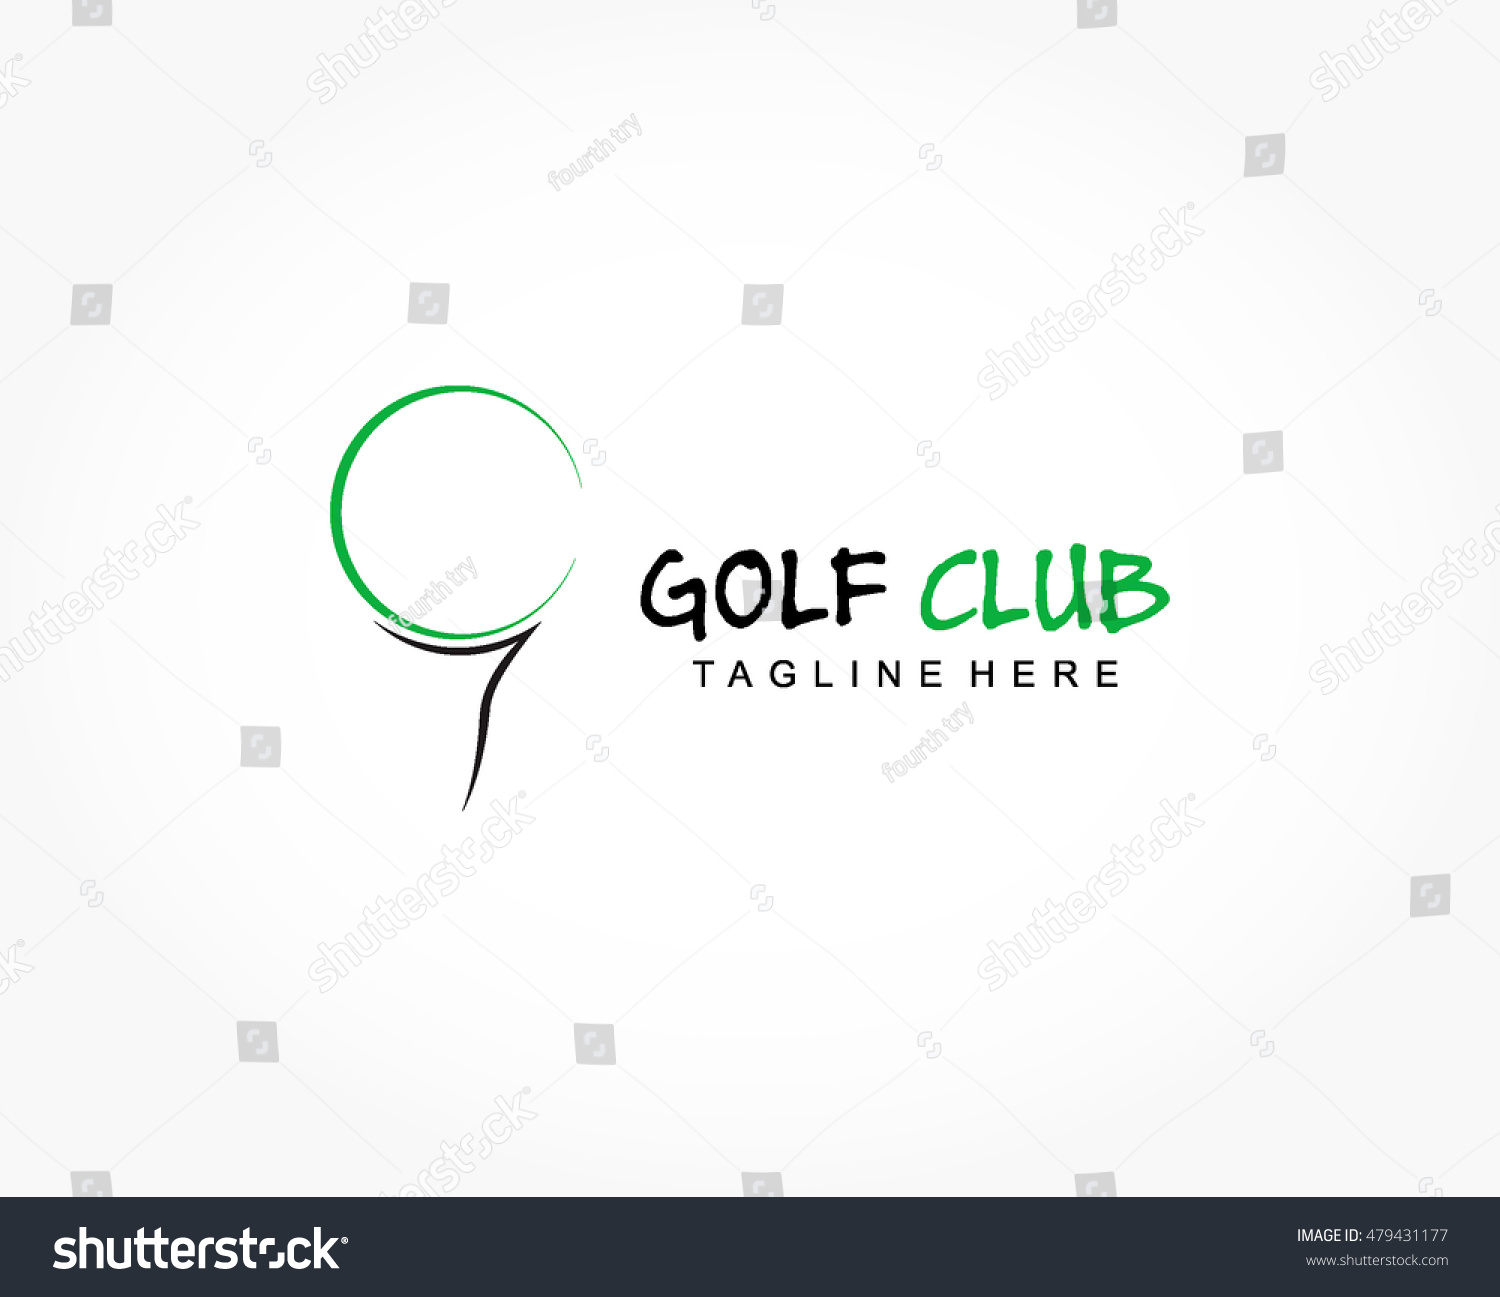 Download Edit Vectors Free Online - simple golf | Shutterstock Editor